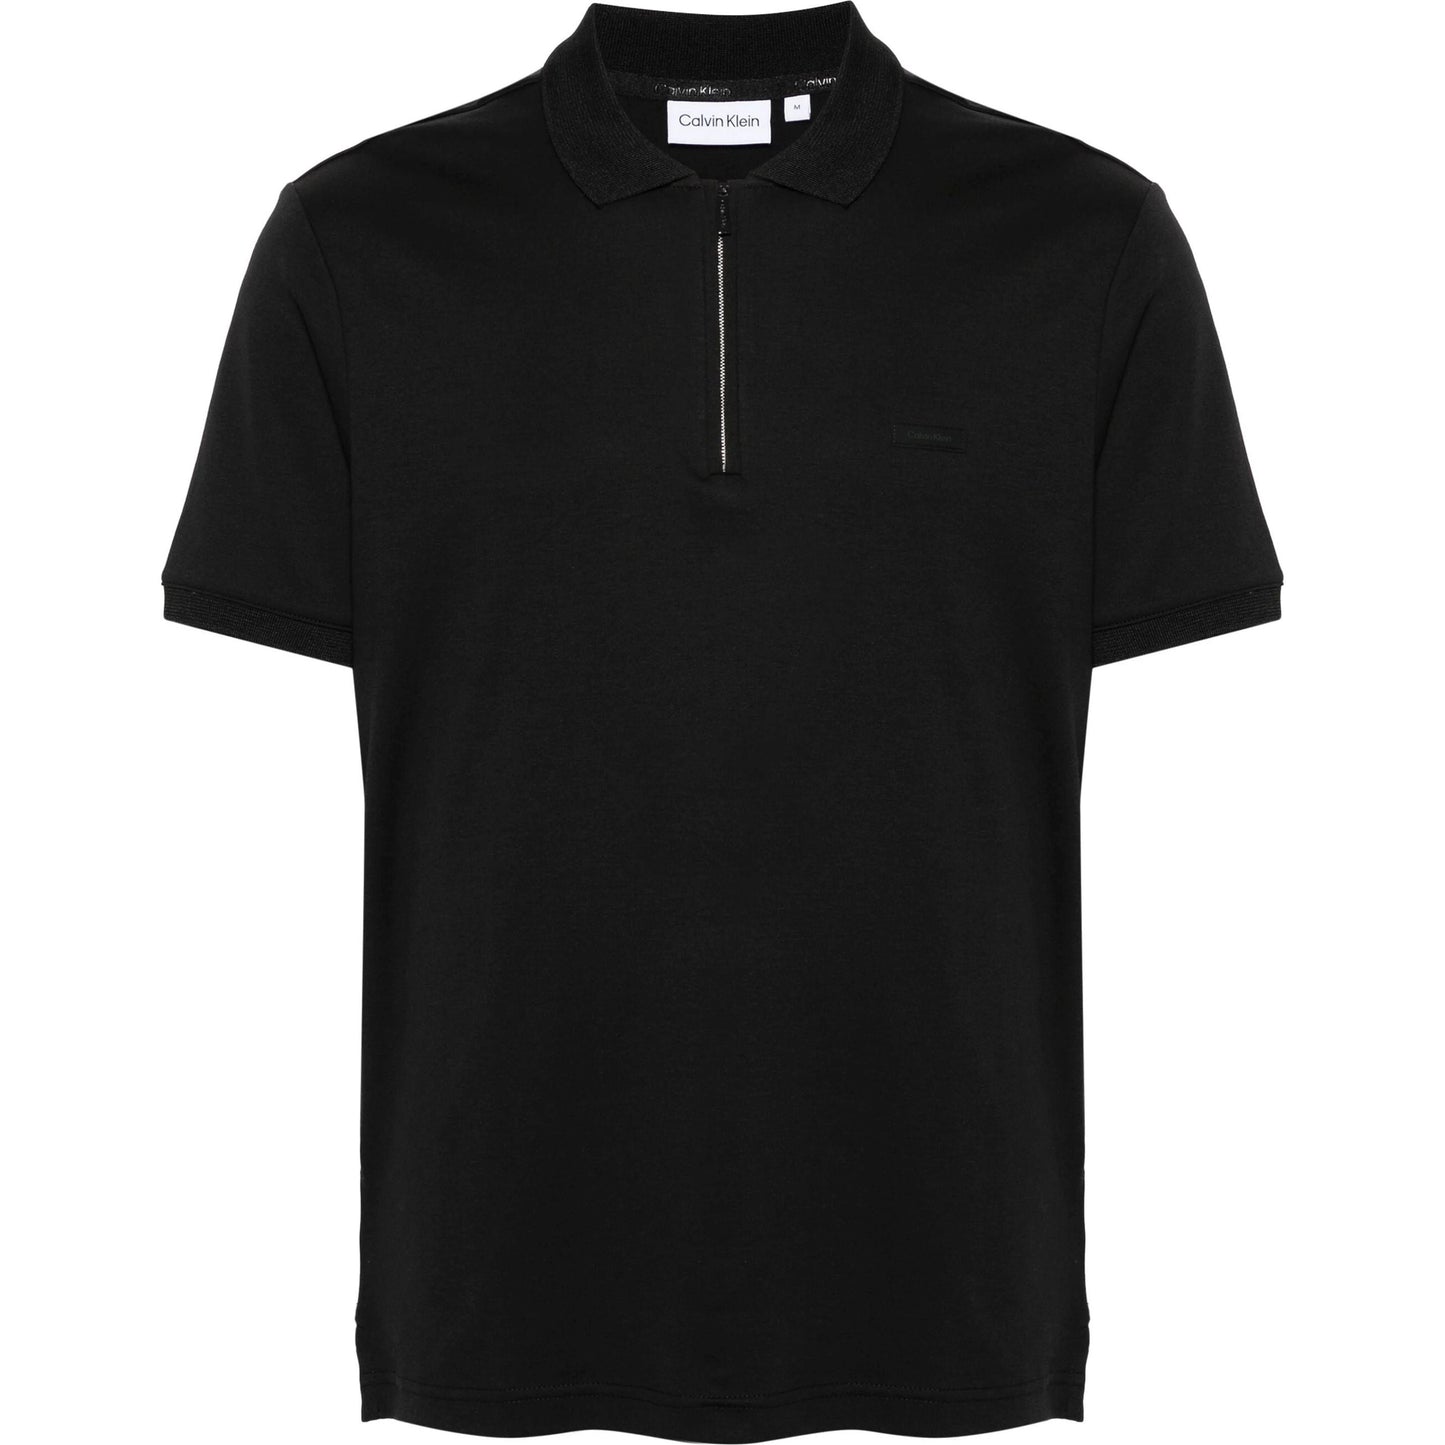 CALVIN KLEIN Polo marškinėliai trumpomis rankovėmis vyrams, Juoda, S/s polo